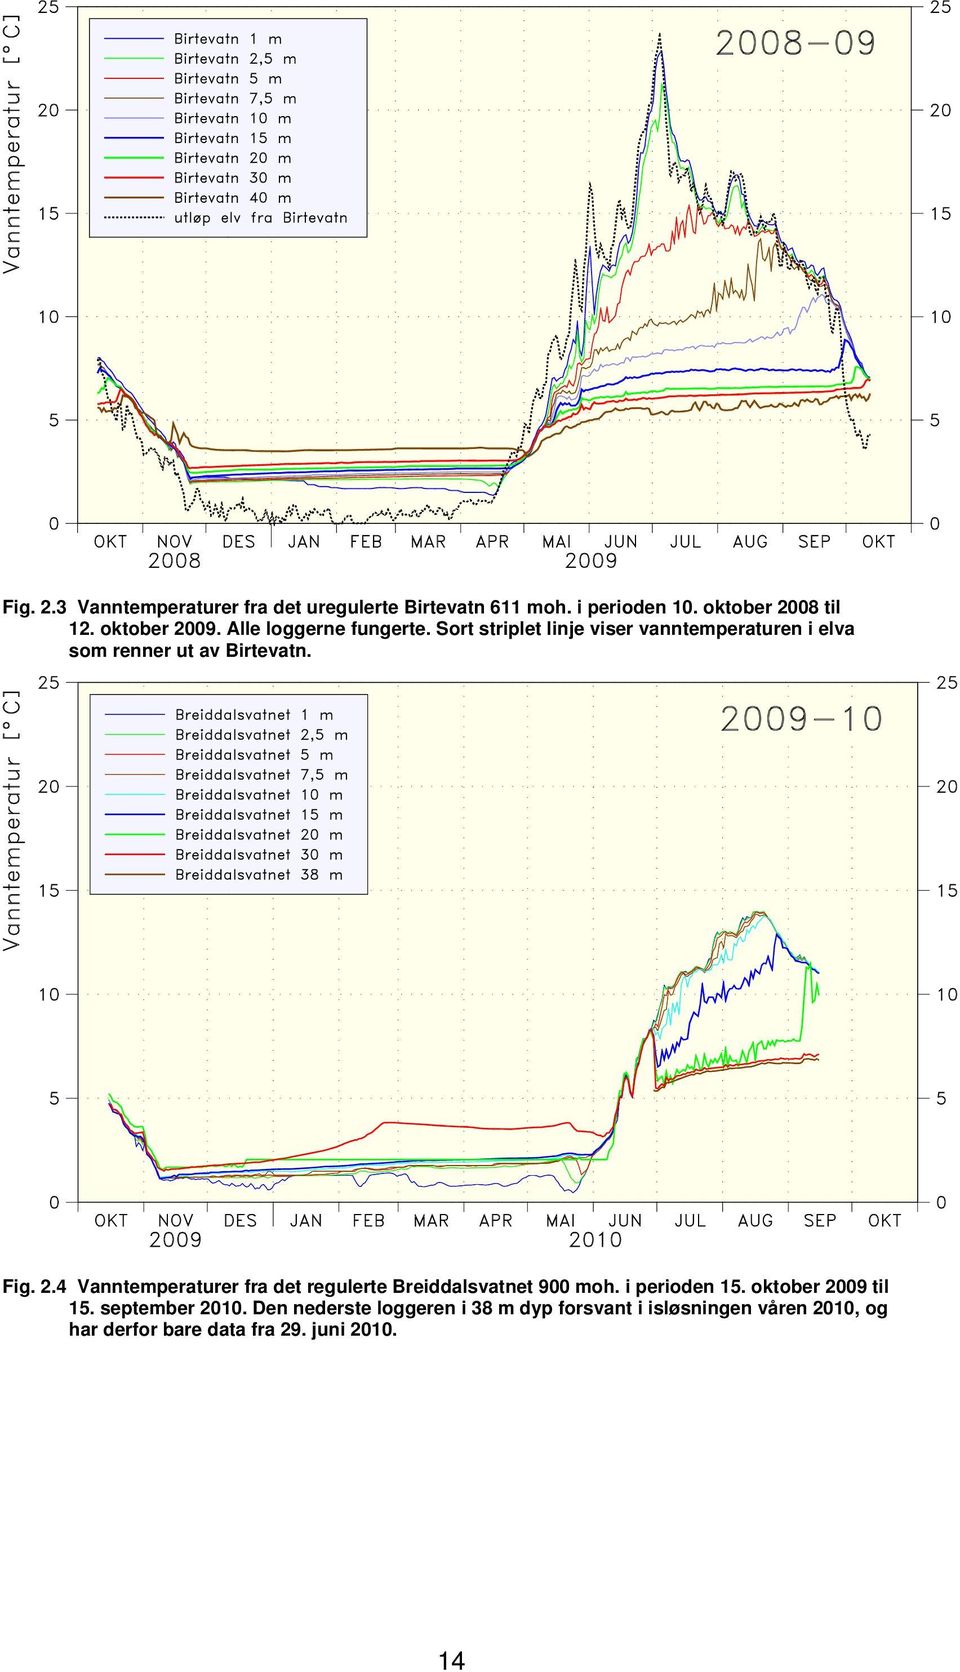 4 Vanntemperaturer fra det regulerte Breiddalsvatnet 900 moh. i perioden 15. oktober 2009 til 15. september 2010.